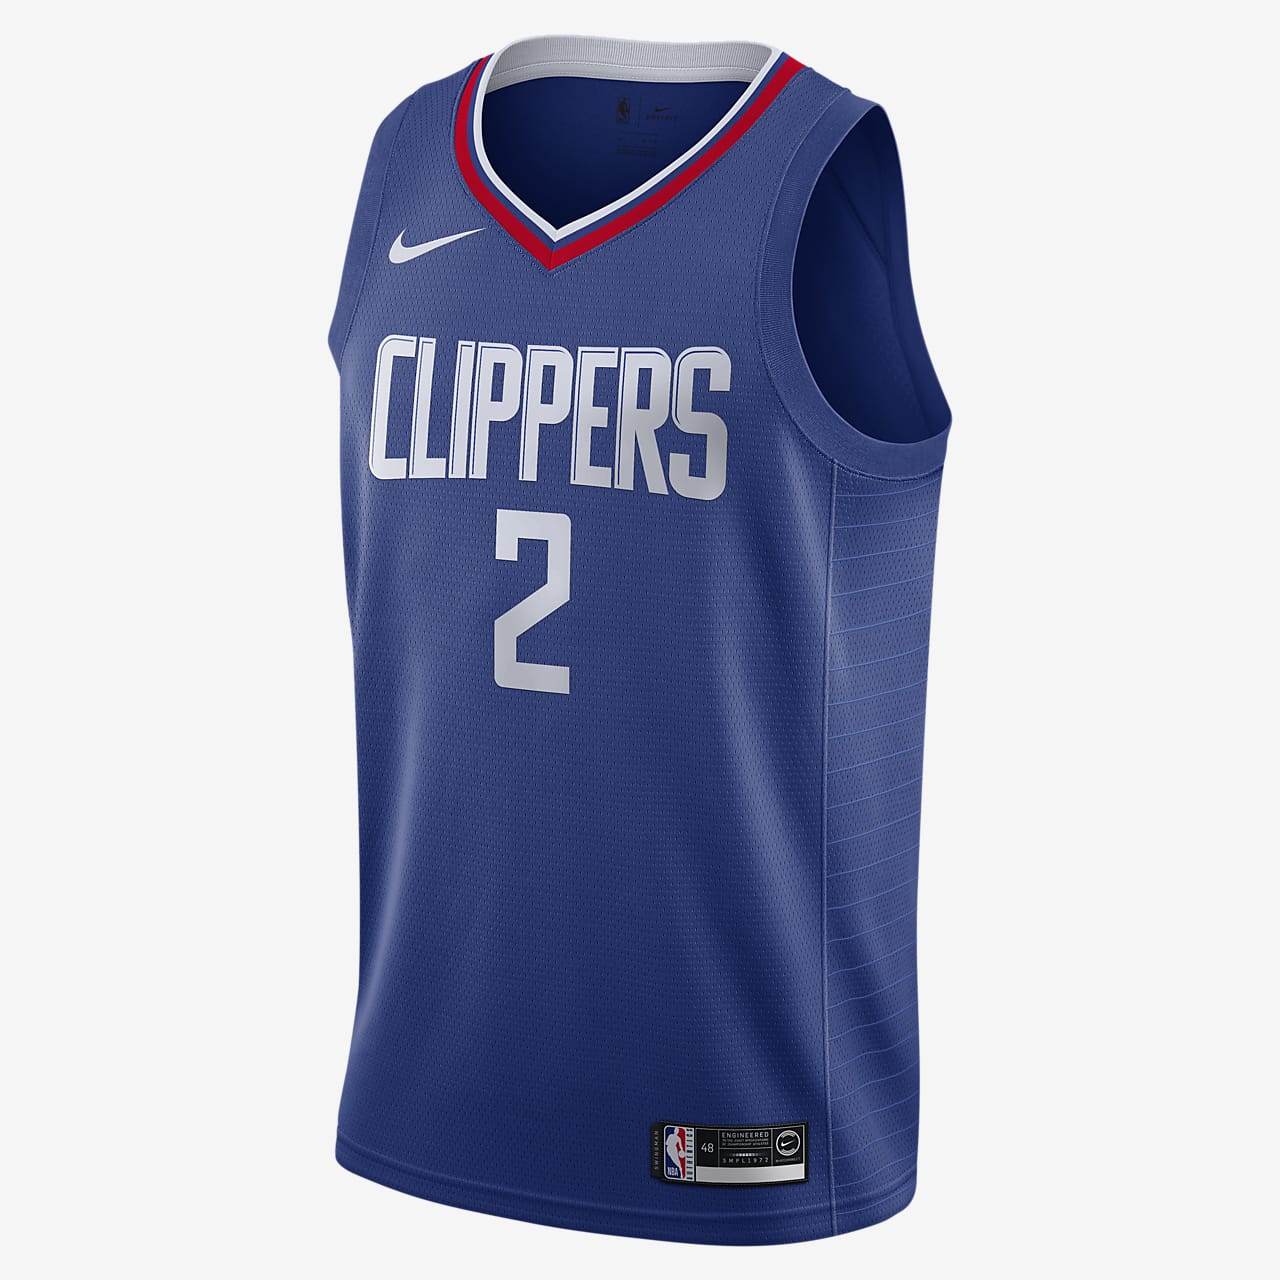 Camiseta Nike NBA Swingman Kawhi Leonard Clippers Icon Edition